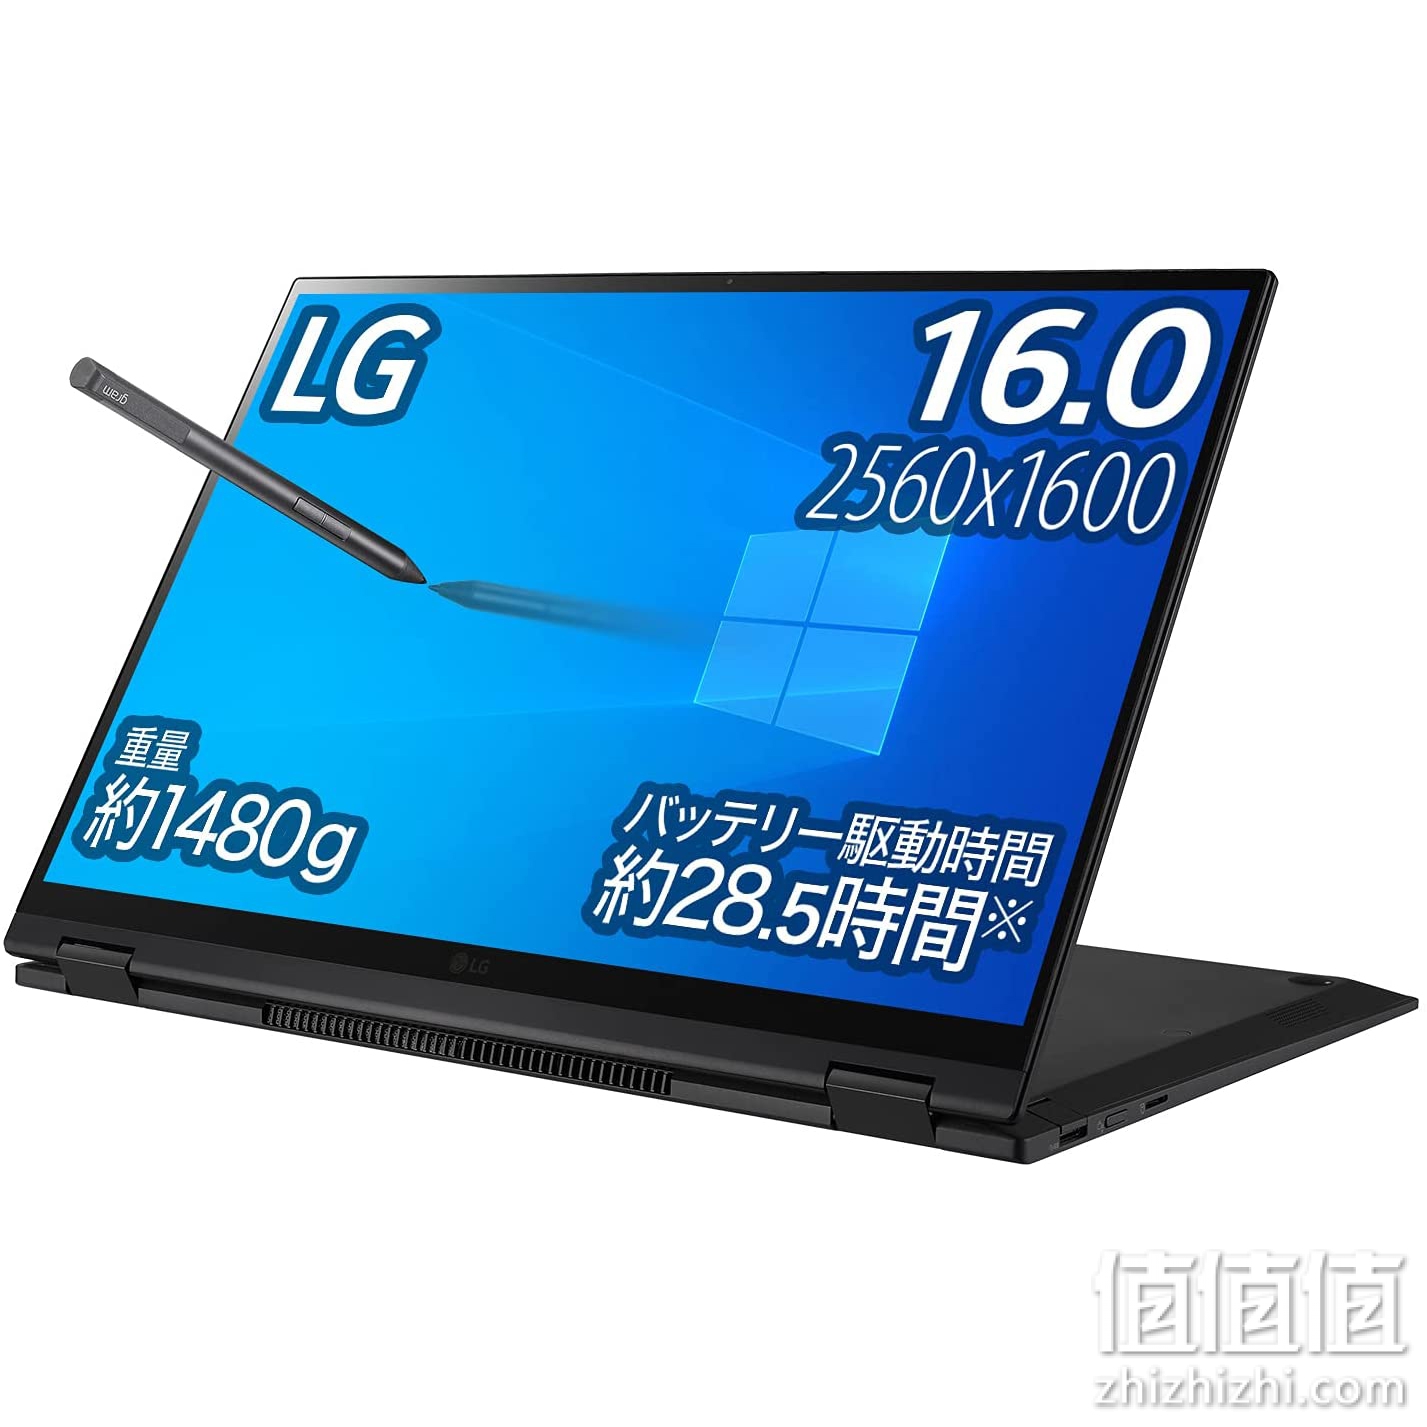 LG gram 2in1 笔记本电脑/1480g/电池续航28.5小时/Core i7/16英寸 2560×1600/内存 16GB/512G SSD/Thunderbolt4/16T90P-KA75J (2021年款)